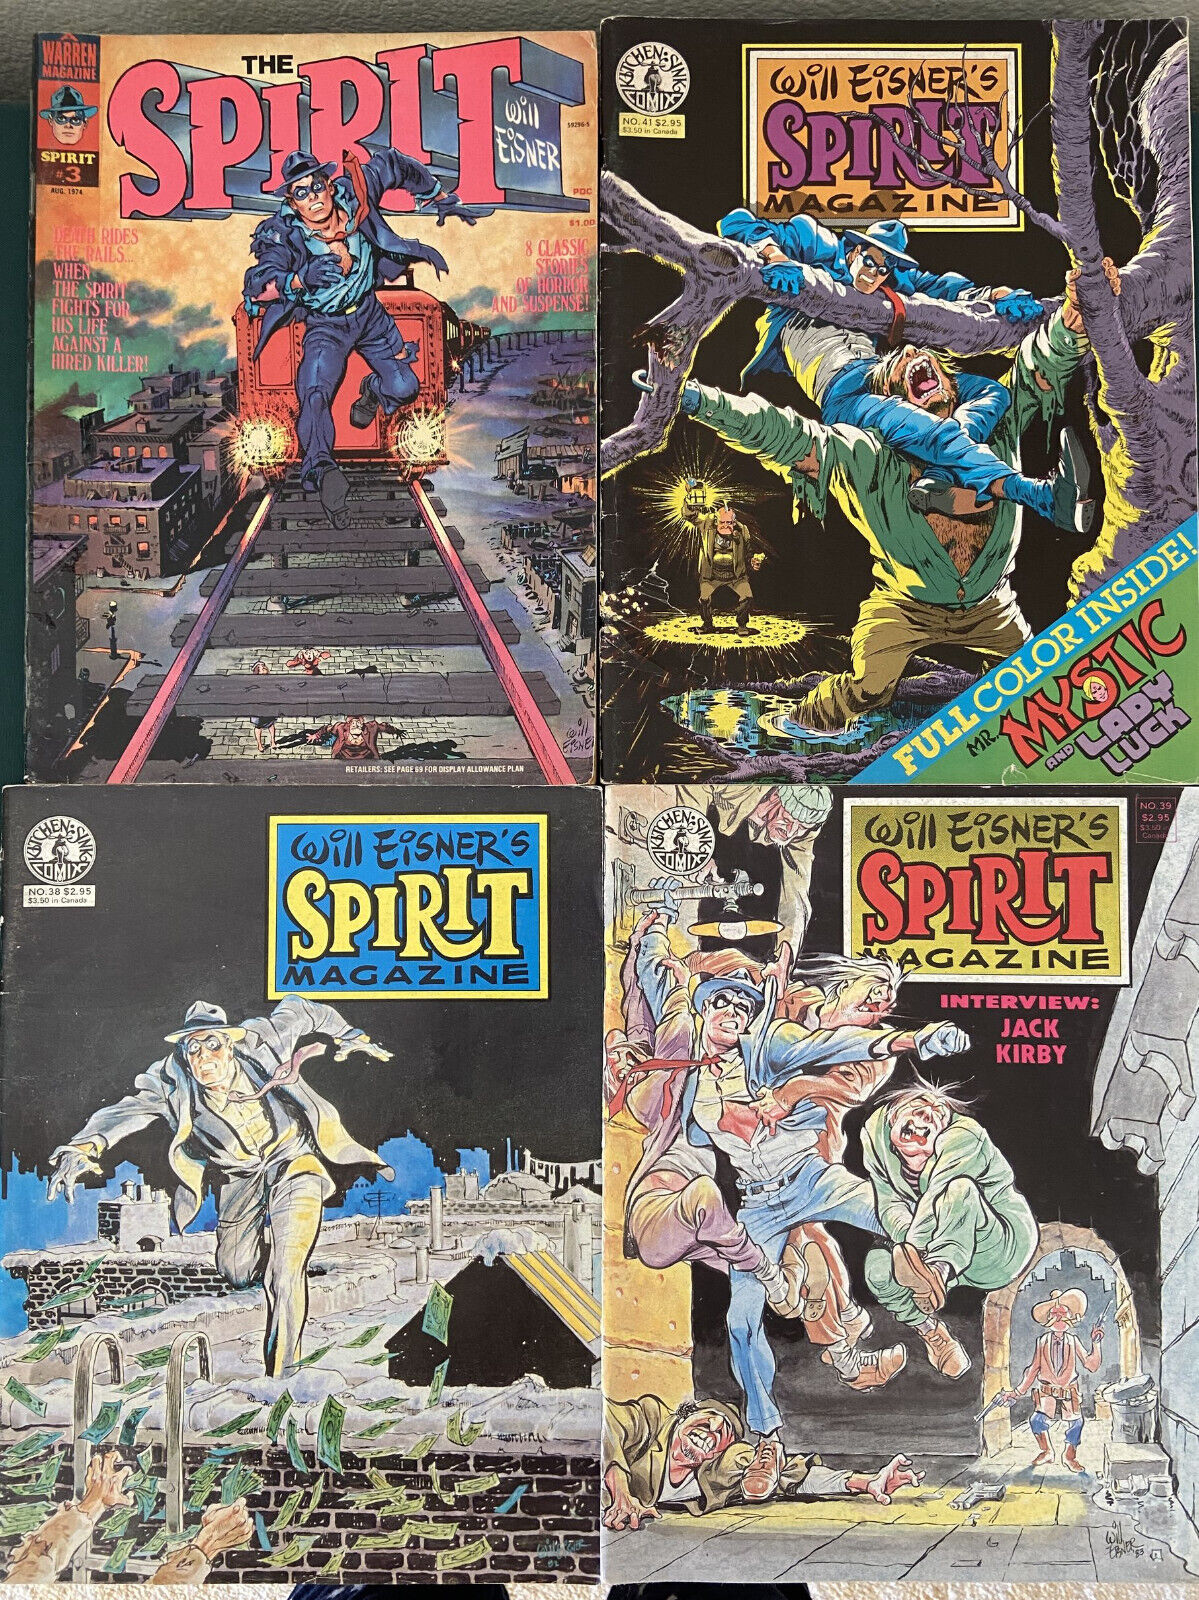 Lot of 4 Will Eisner’s Spirit Magazines Jack Kirby #3, 38 39 41, 1974-1983 Comic